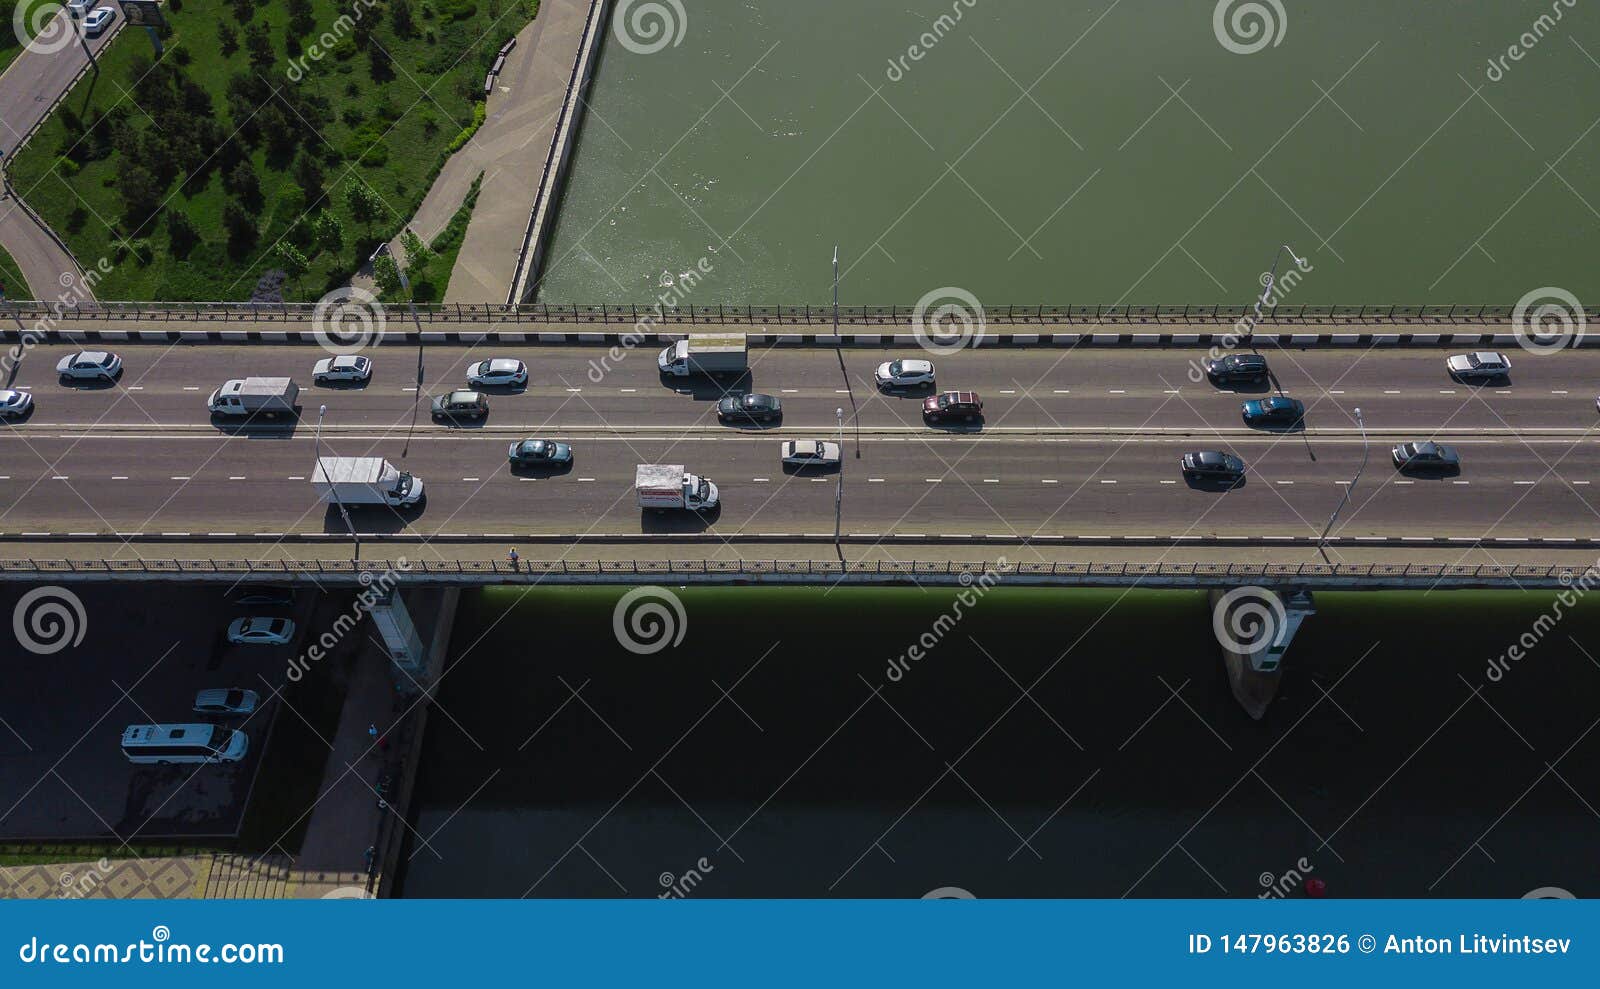 Drone S Eye View - Aerial View of Urban Traffic Jam on City Bridge ...